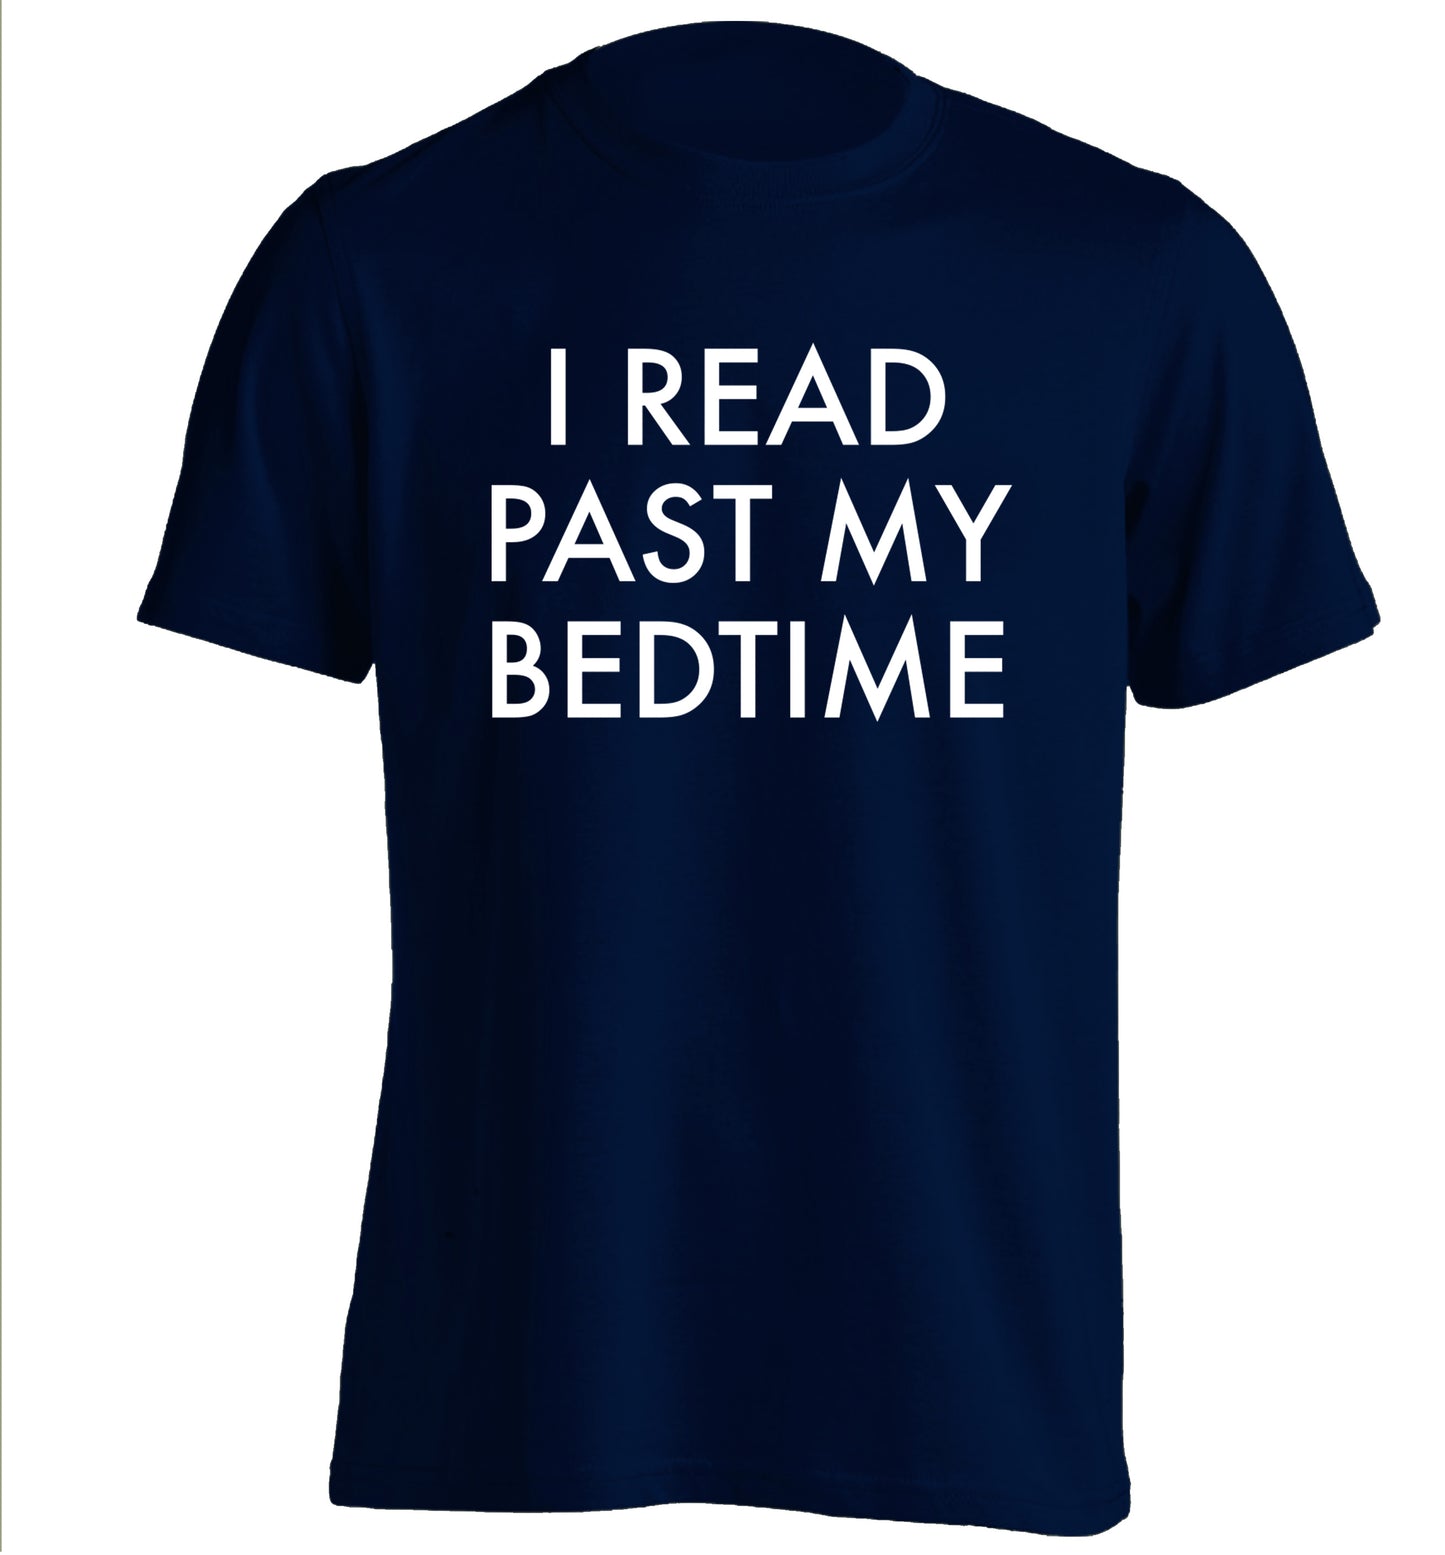 I read past my bedtime adults unisex navy Tshirt 2XL